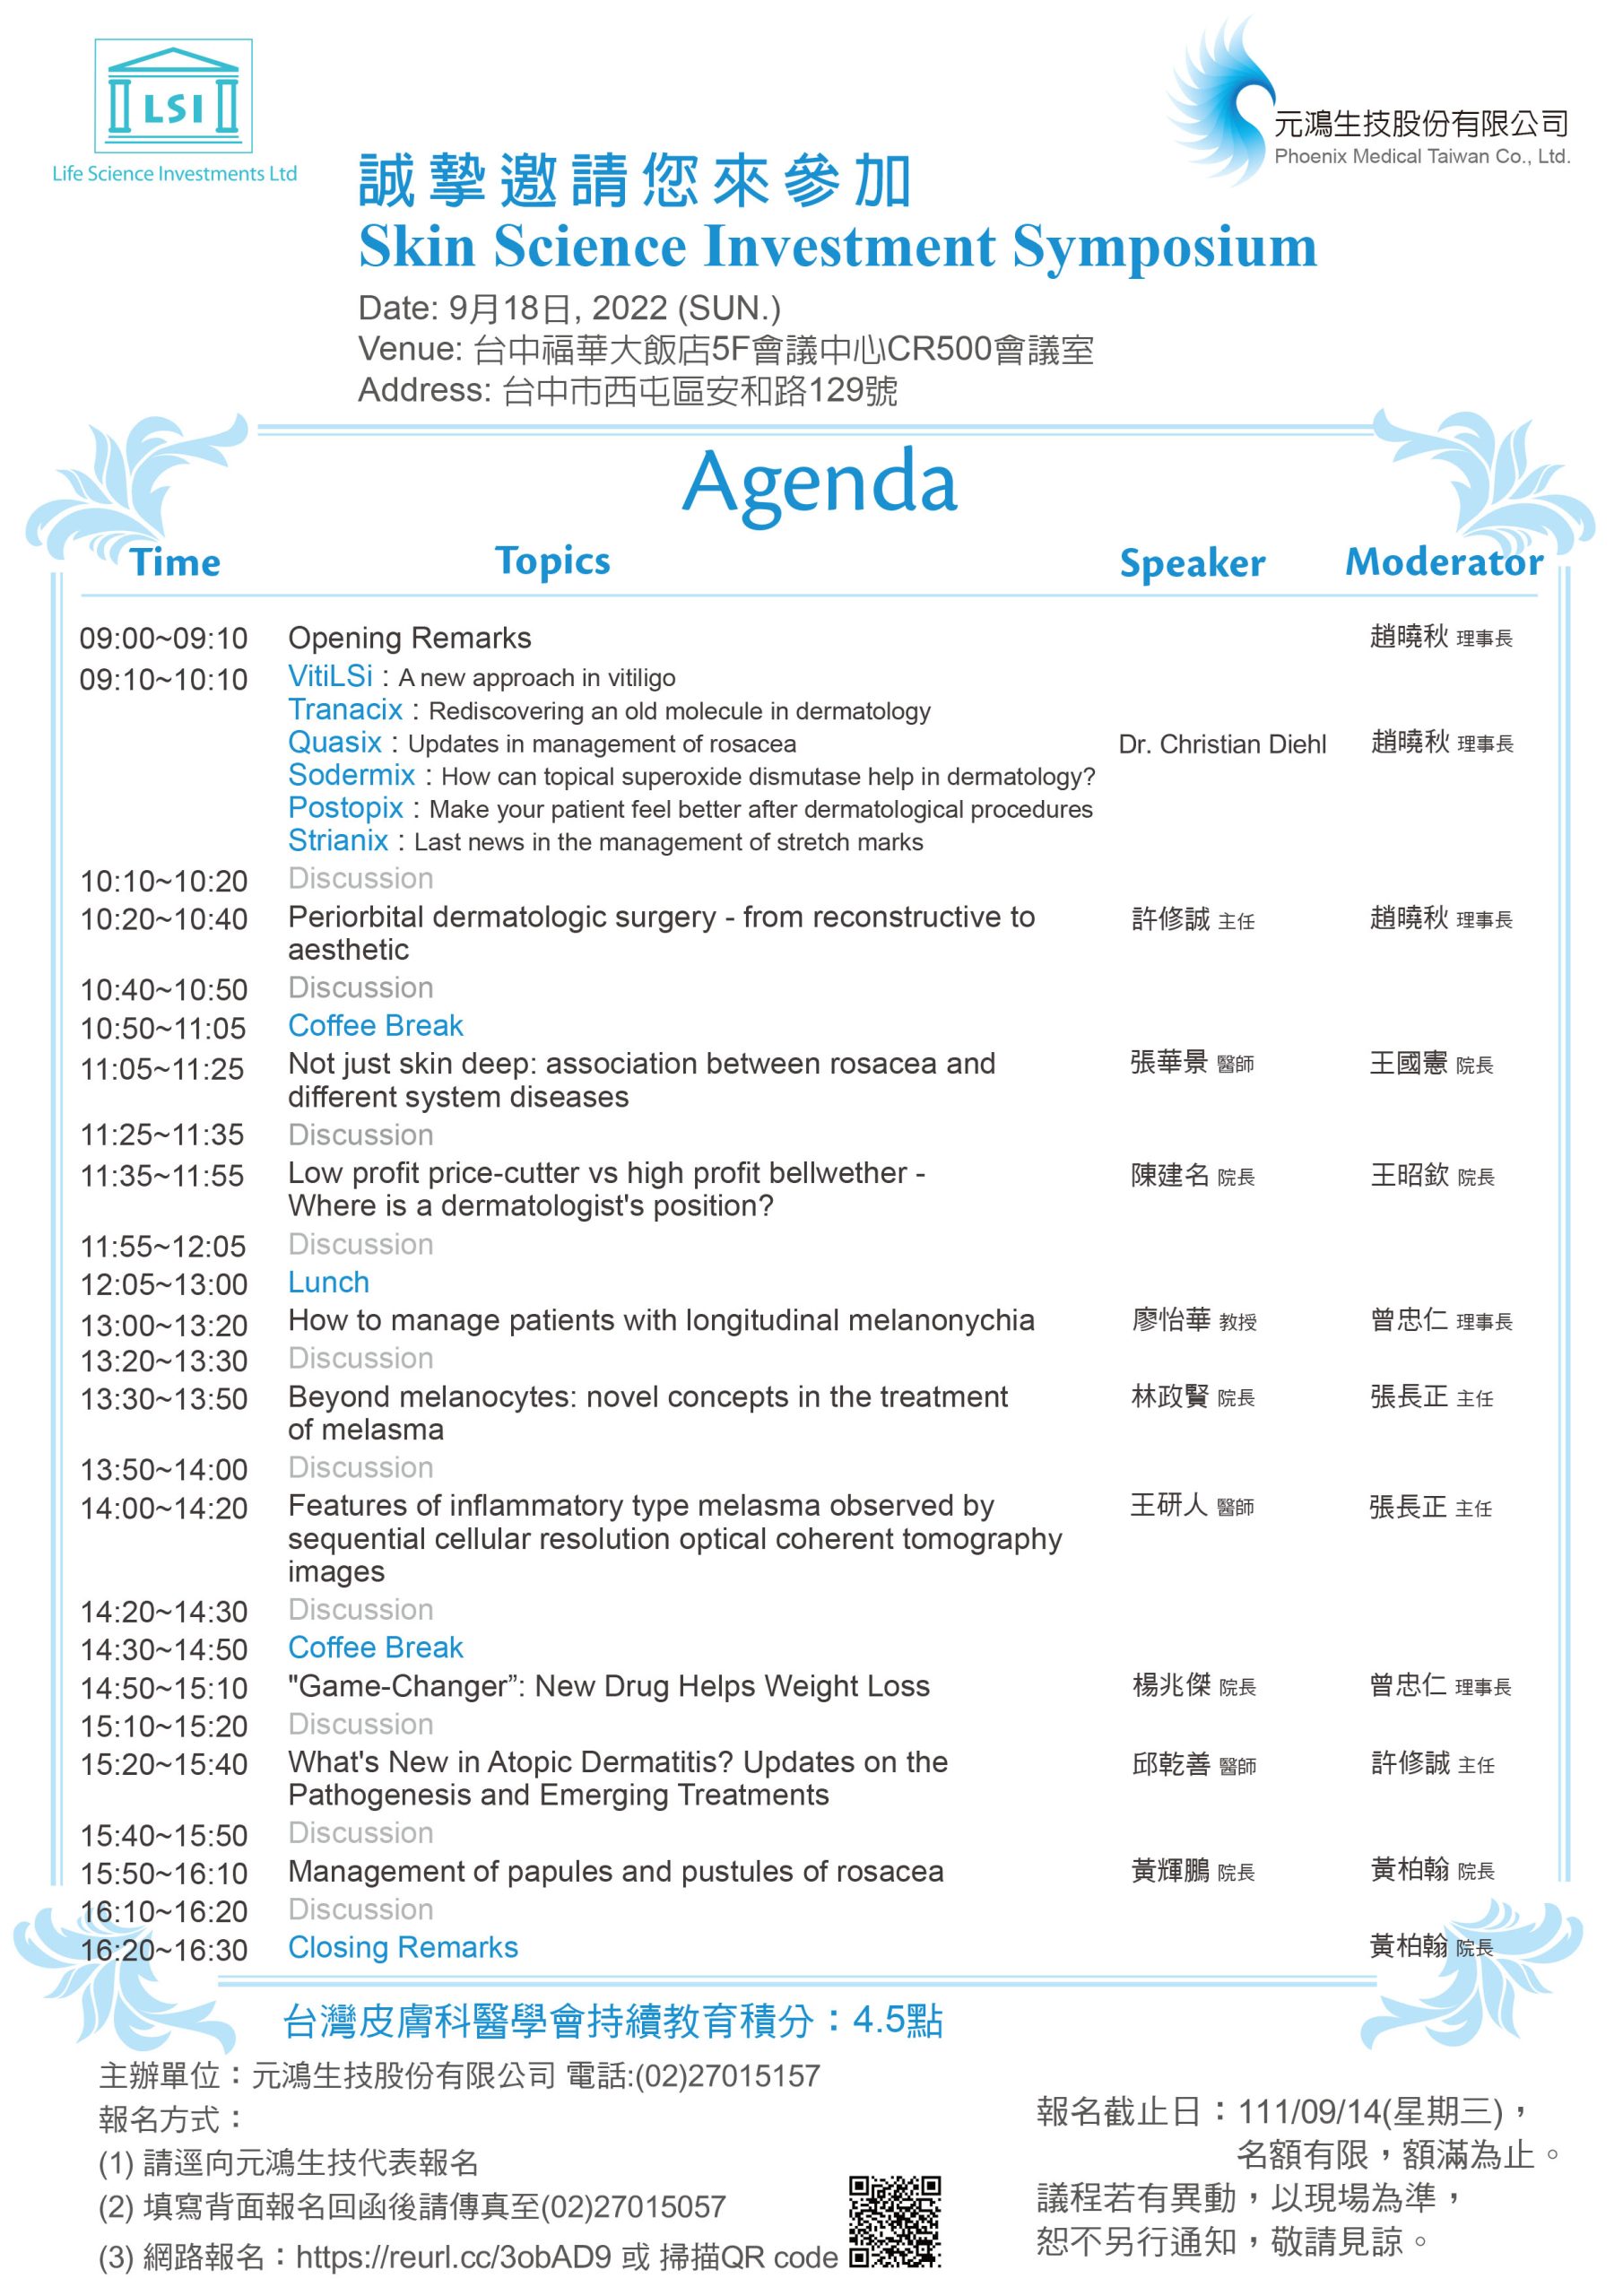 本公司即將於111年9月18日舉辦Skin Science Investment Symposium 研討會